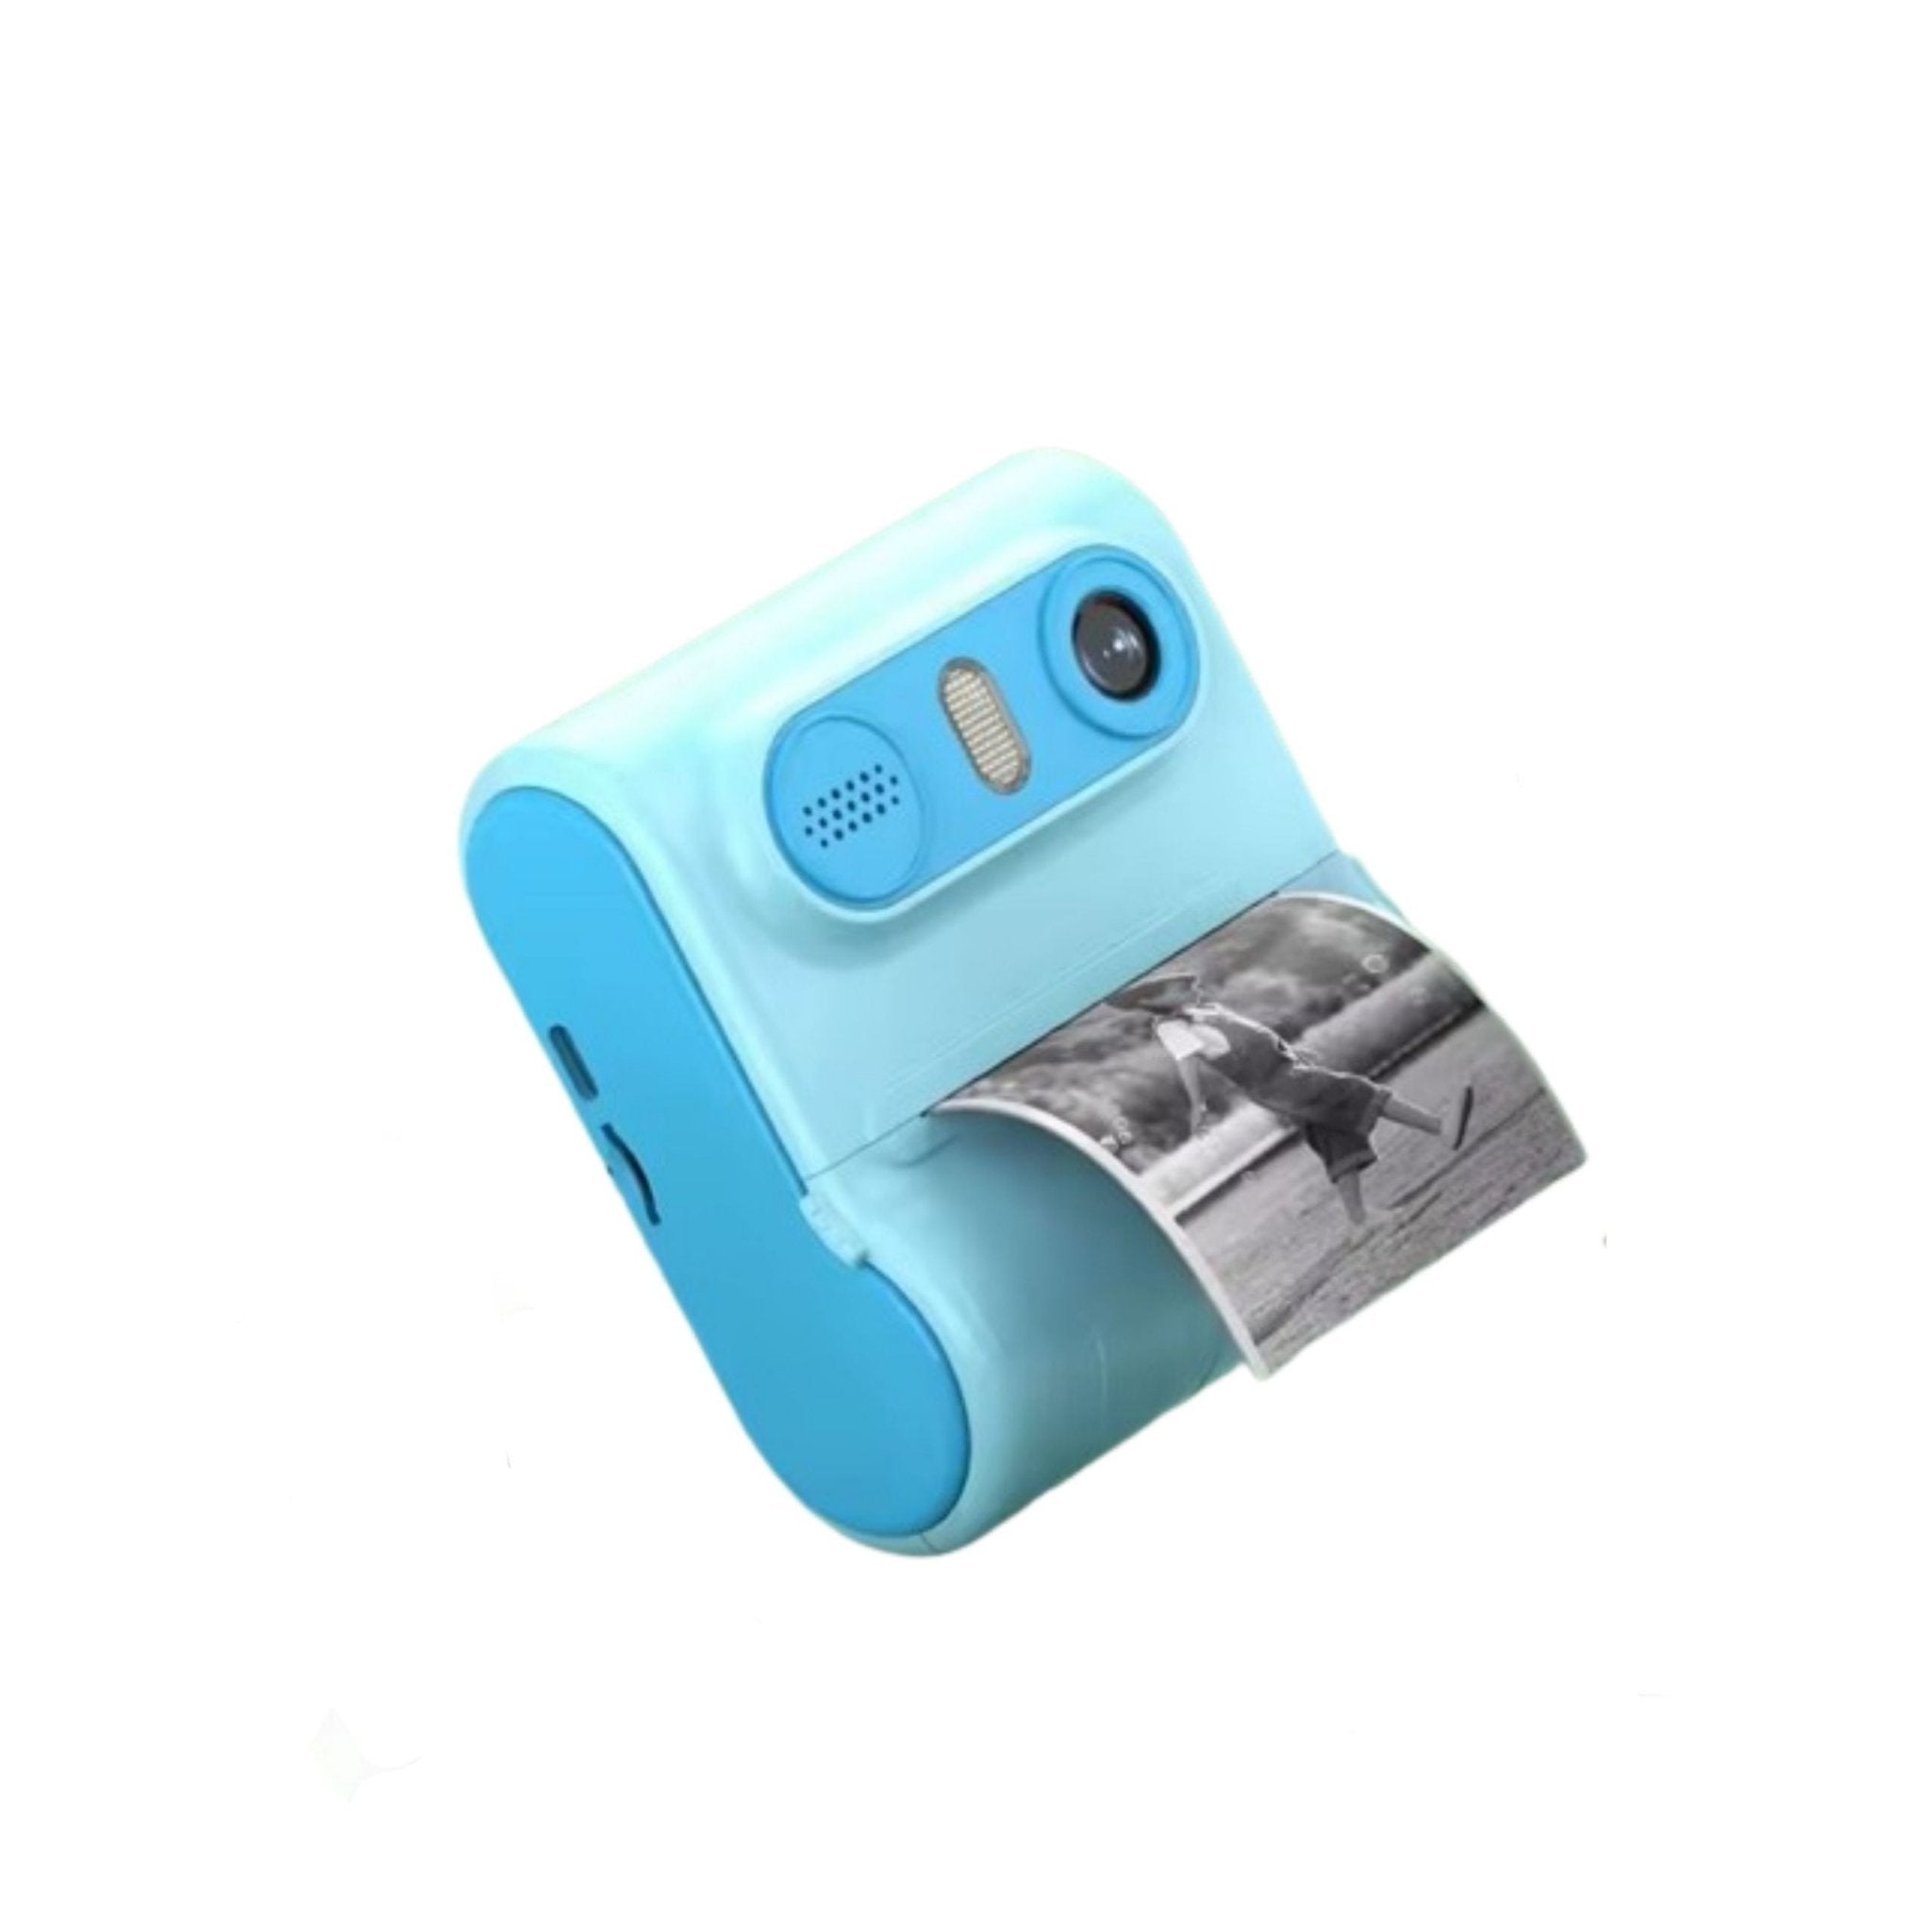 Thermal Printer LK001 Portable Wireless Kids Camera